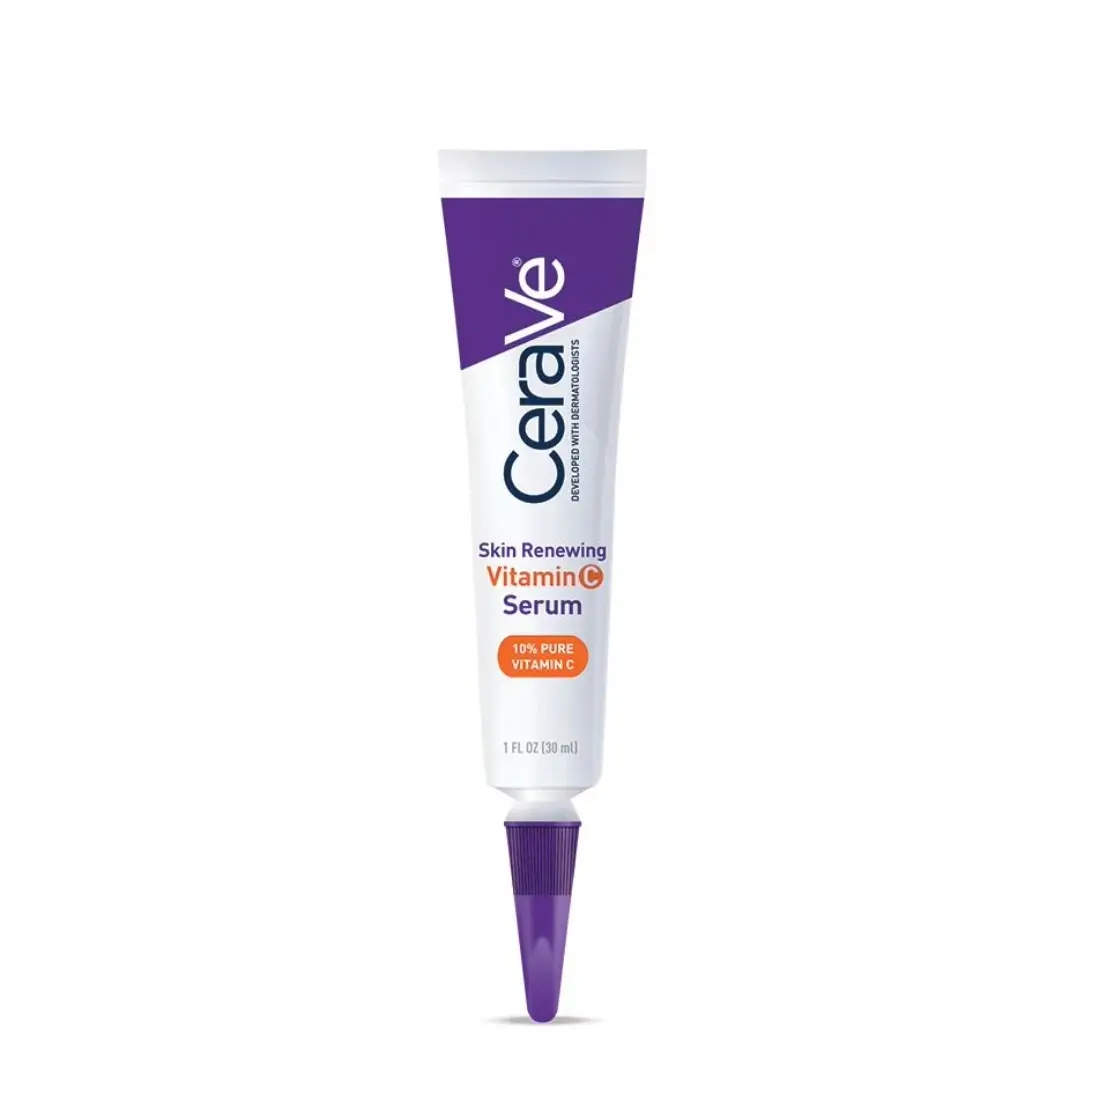 Best Drugstore Vitamin C serum: CeraVe Skin Renewing Vitamin C